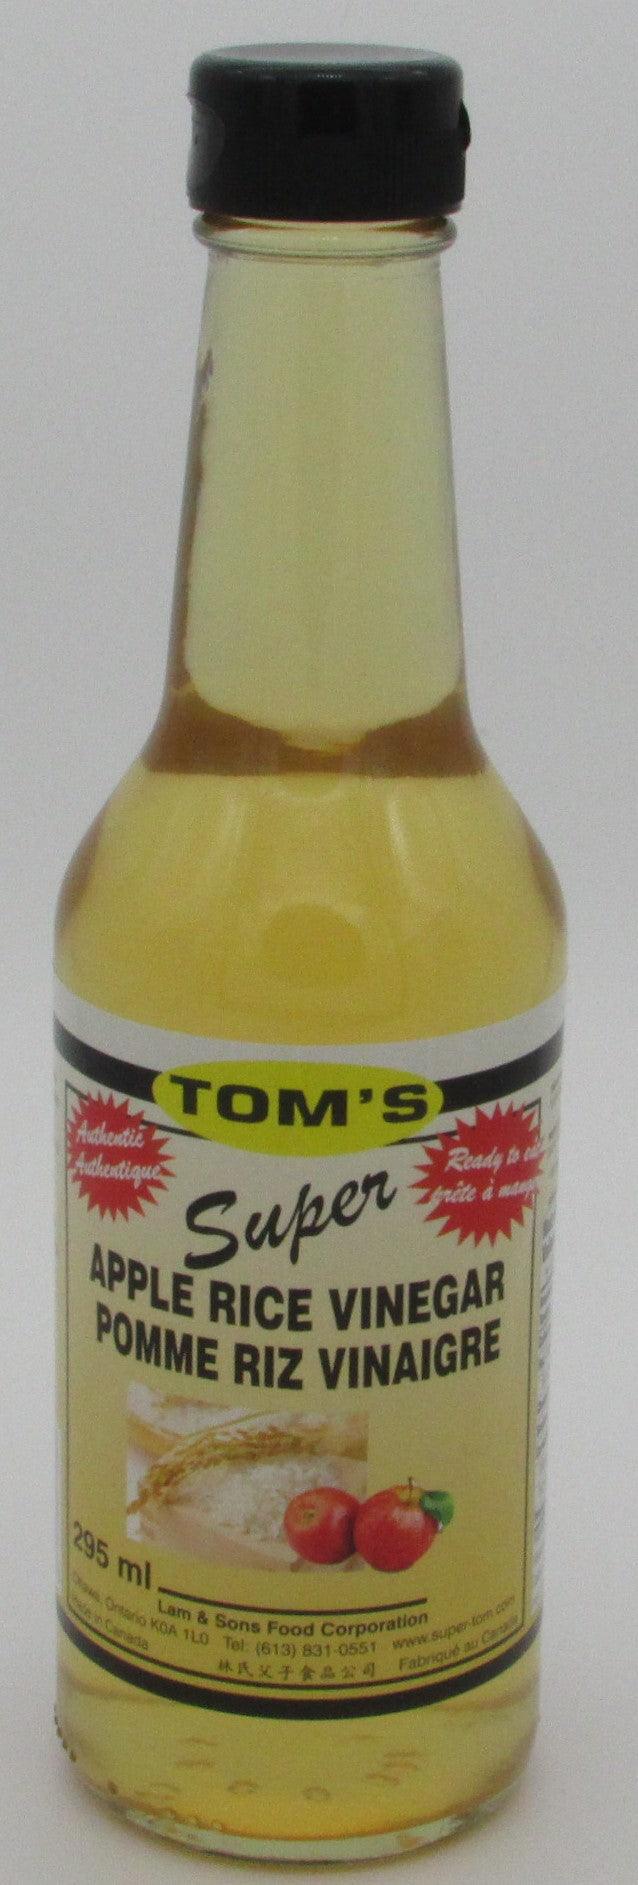 Super Tom's Vinegars - Canadian Moringa